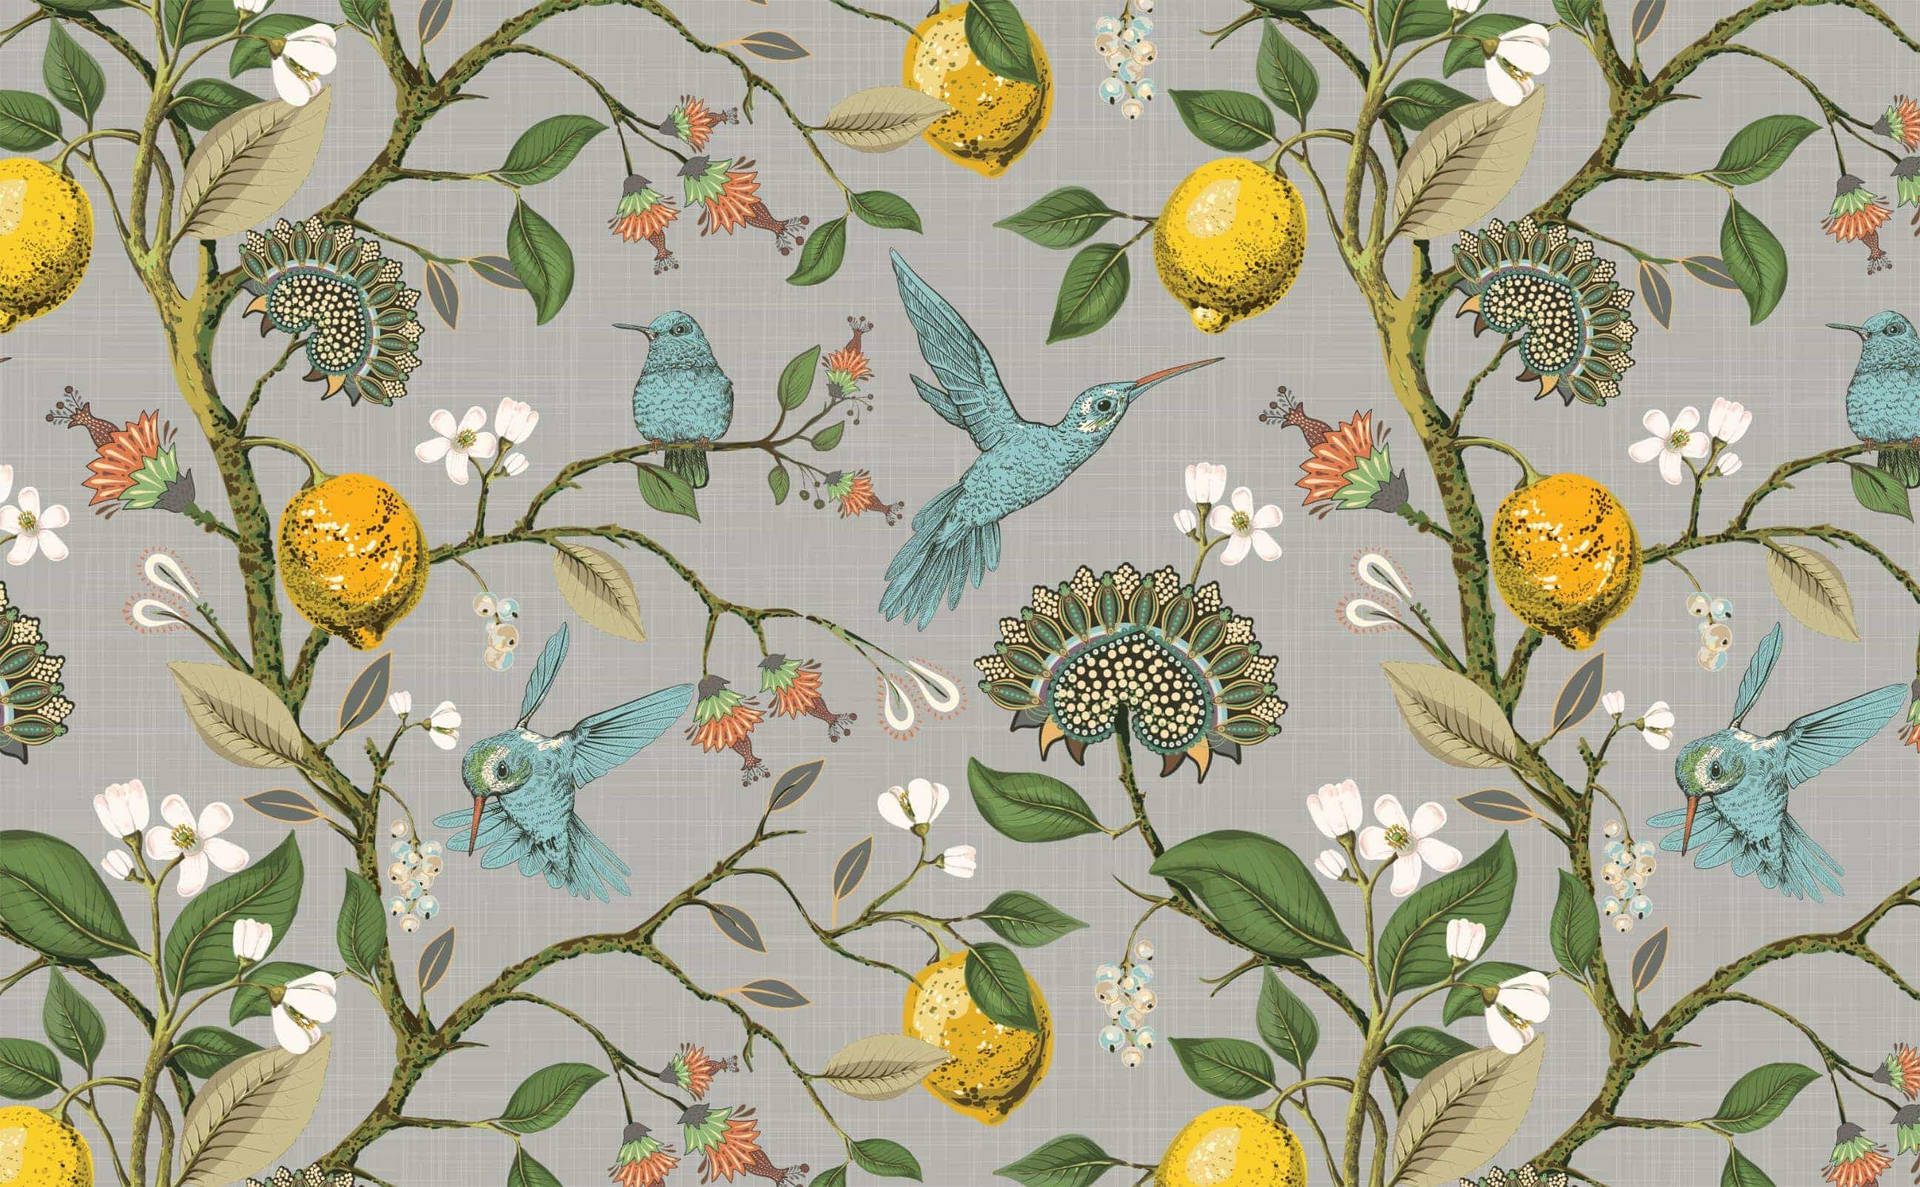 Lemon Tree With Humming Bird Wallpaper